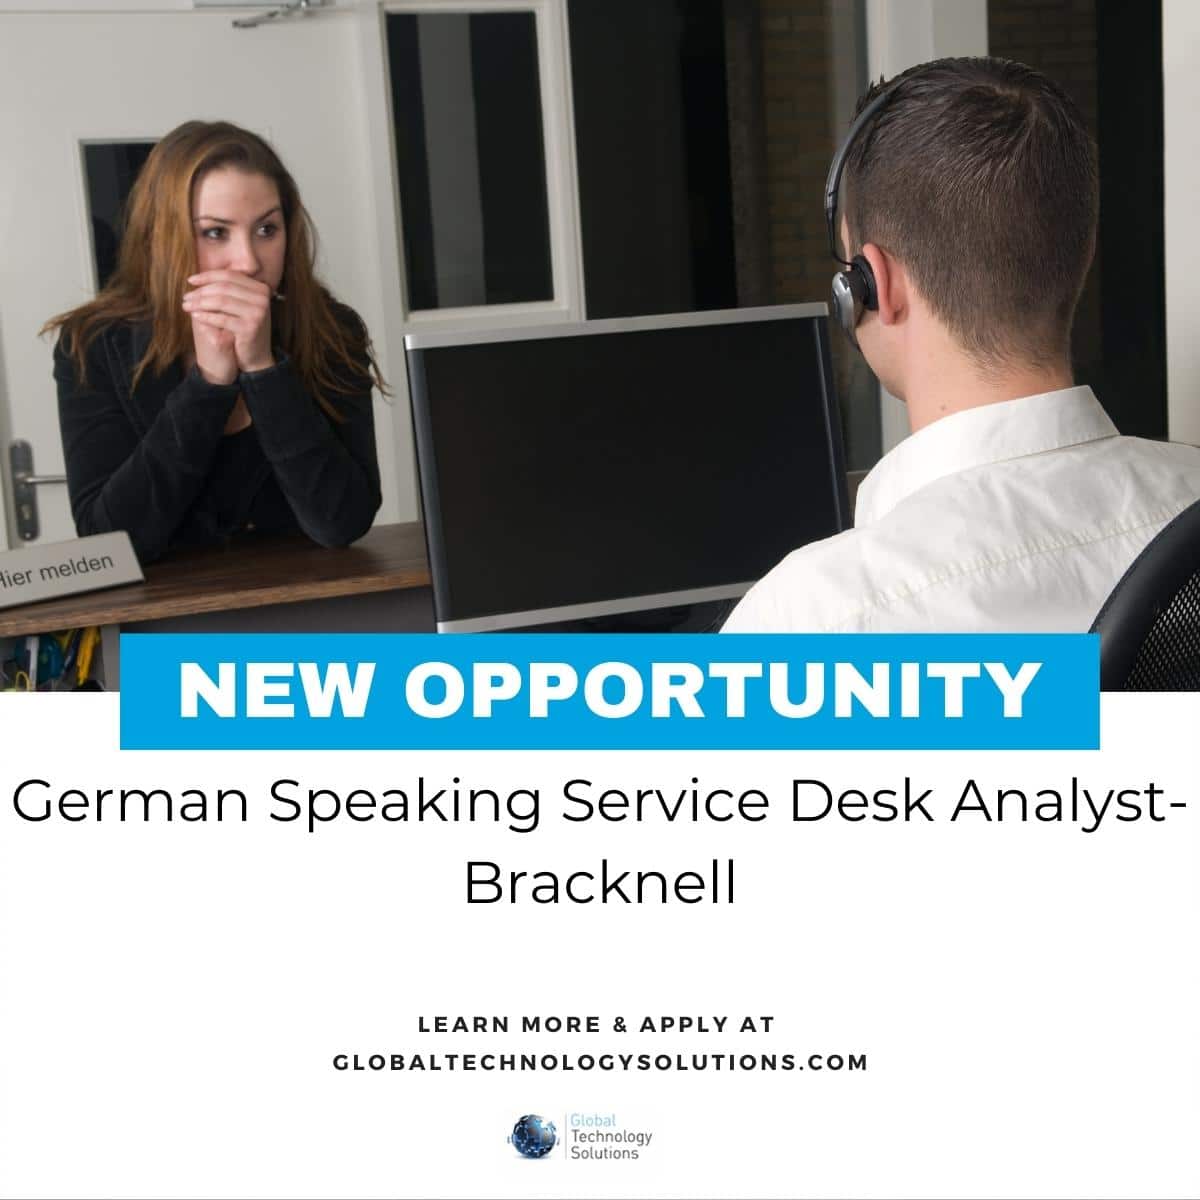 A German Speaking Service Desk Analyst in Bracknell.